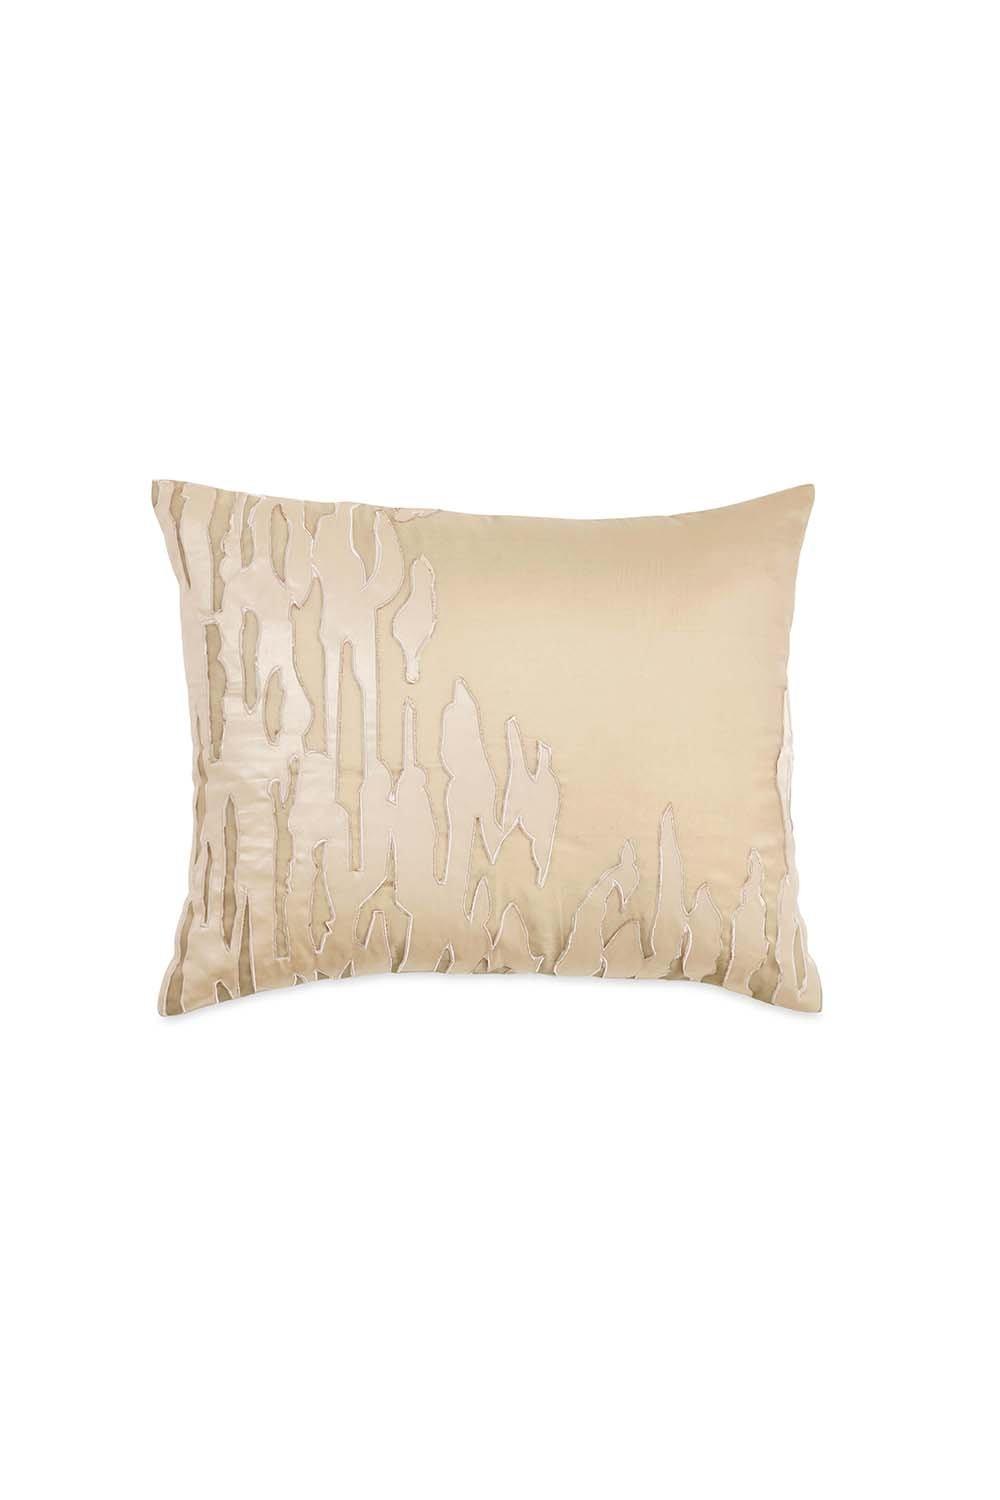 Soft Furnishings | 'Gold Dust' Cushion 40X50cm | Donna Karan